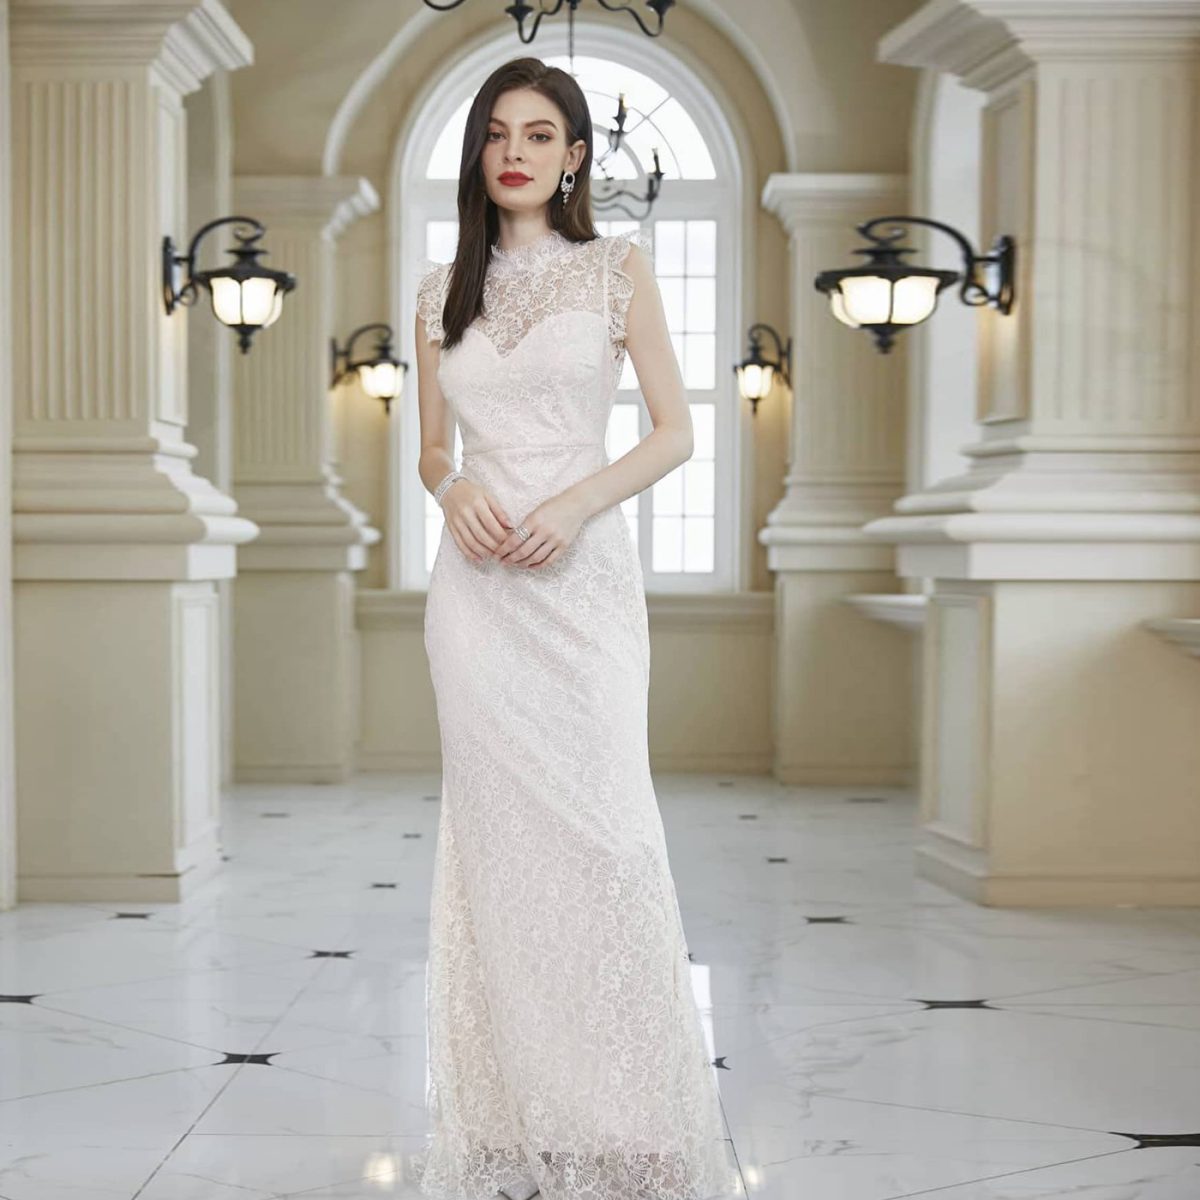 Slim Sleeveless See through Wedding Dress - Wedding dresses - Uniqistic.com